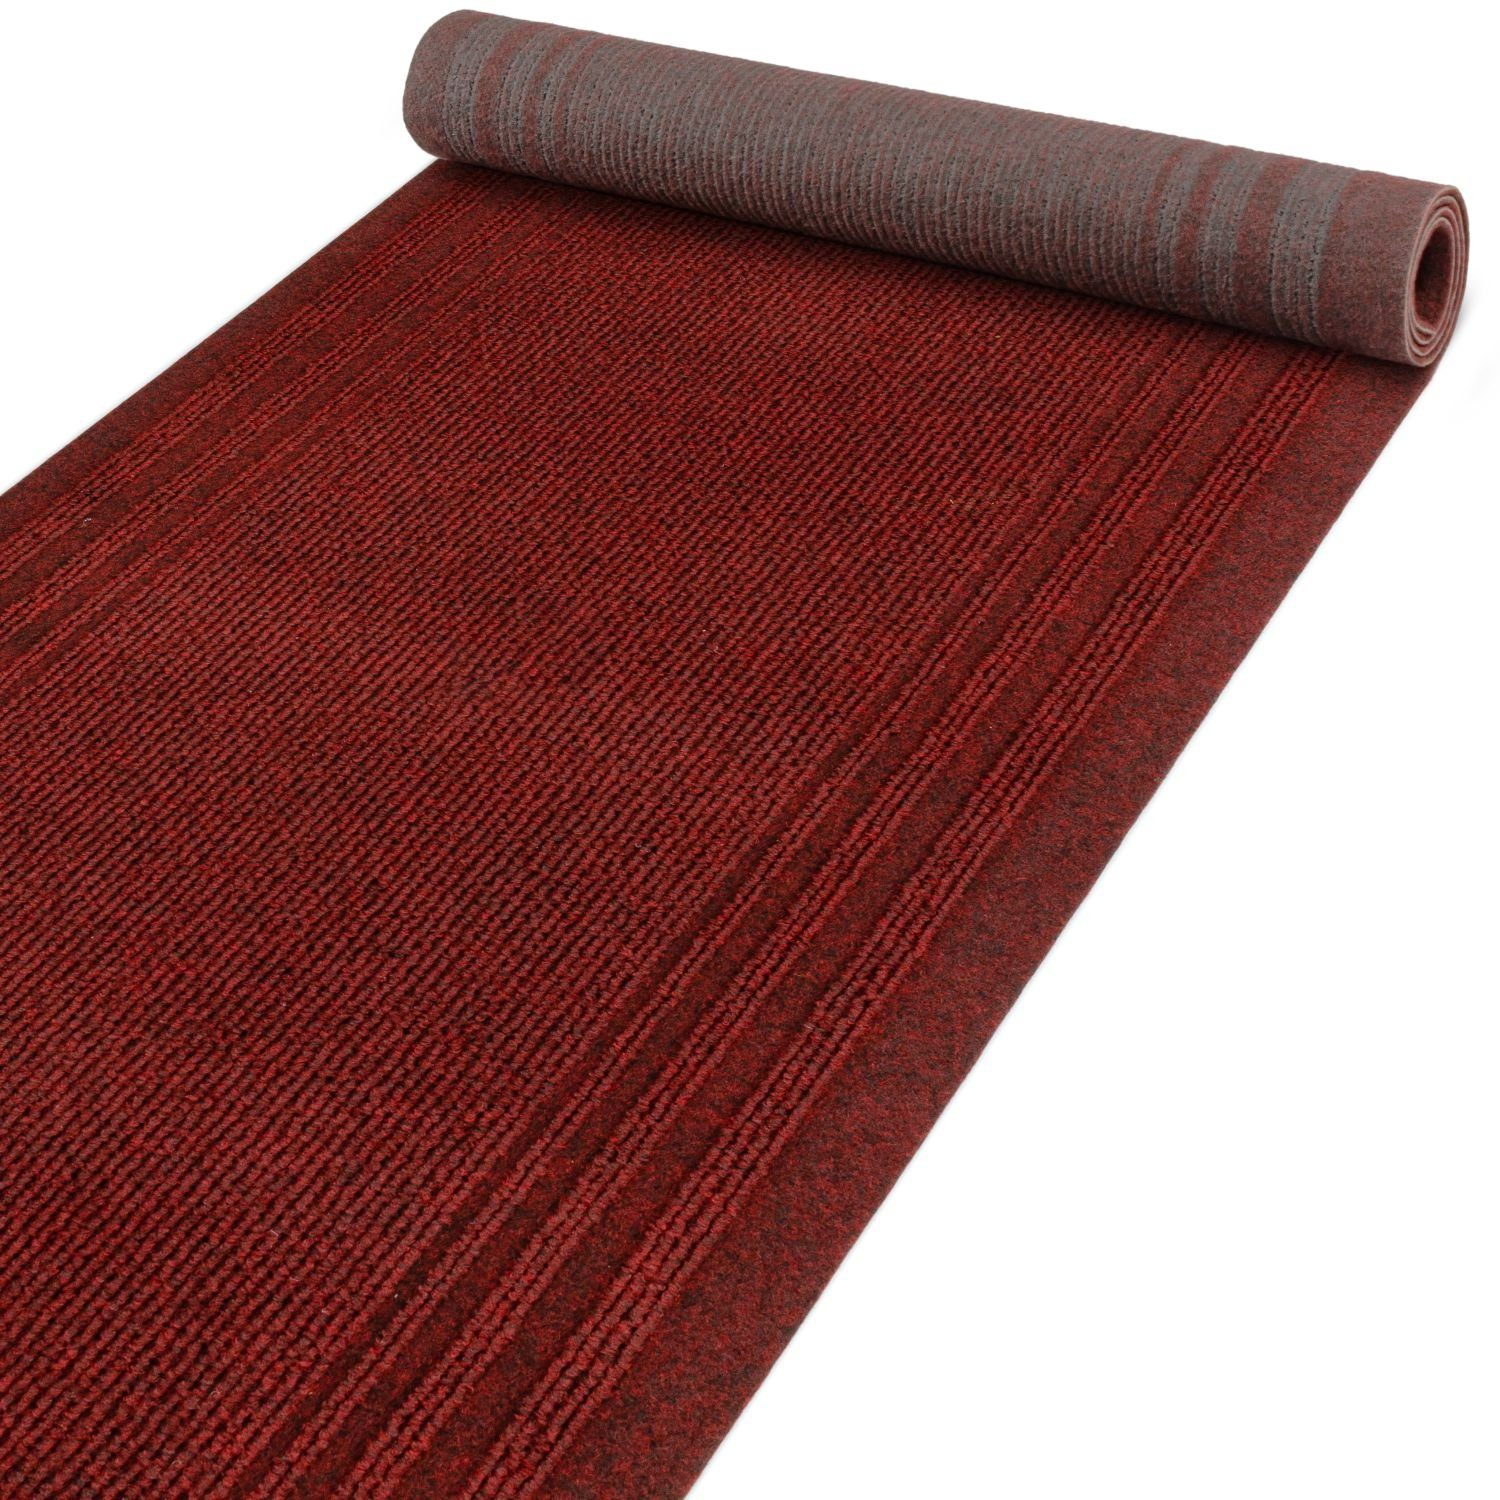 Höhe: Läufer Bodenläufer Rechteckig, Textil Rot PASSAT ANRO, Flurläufer 5 mm, Gestreift Textil Teppich Robust, Läufer